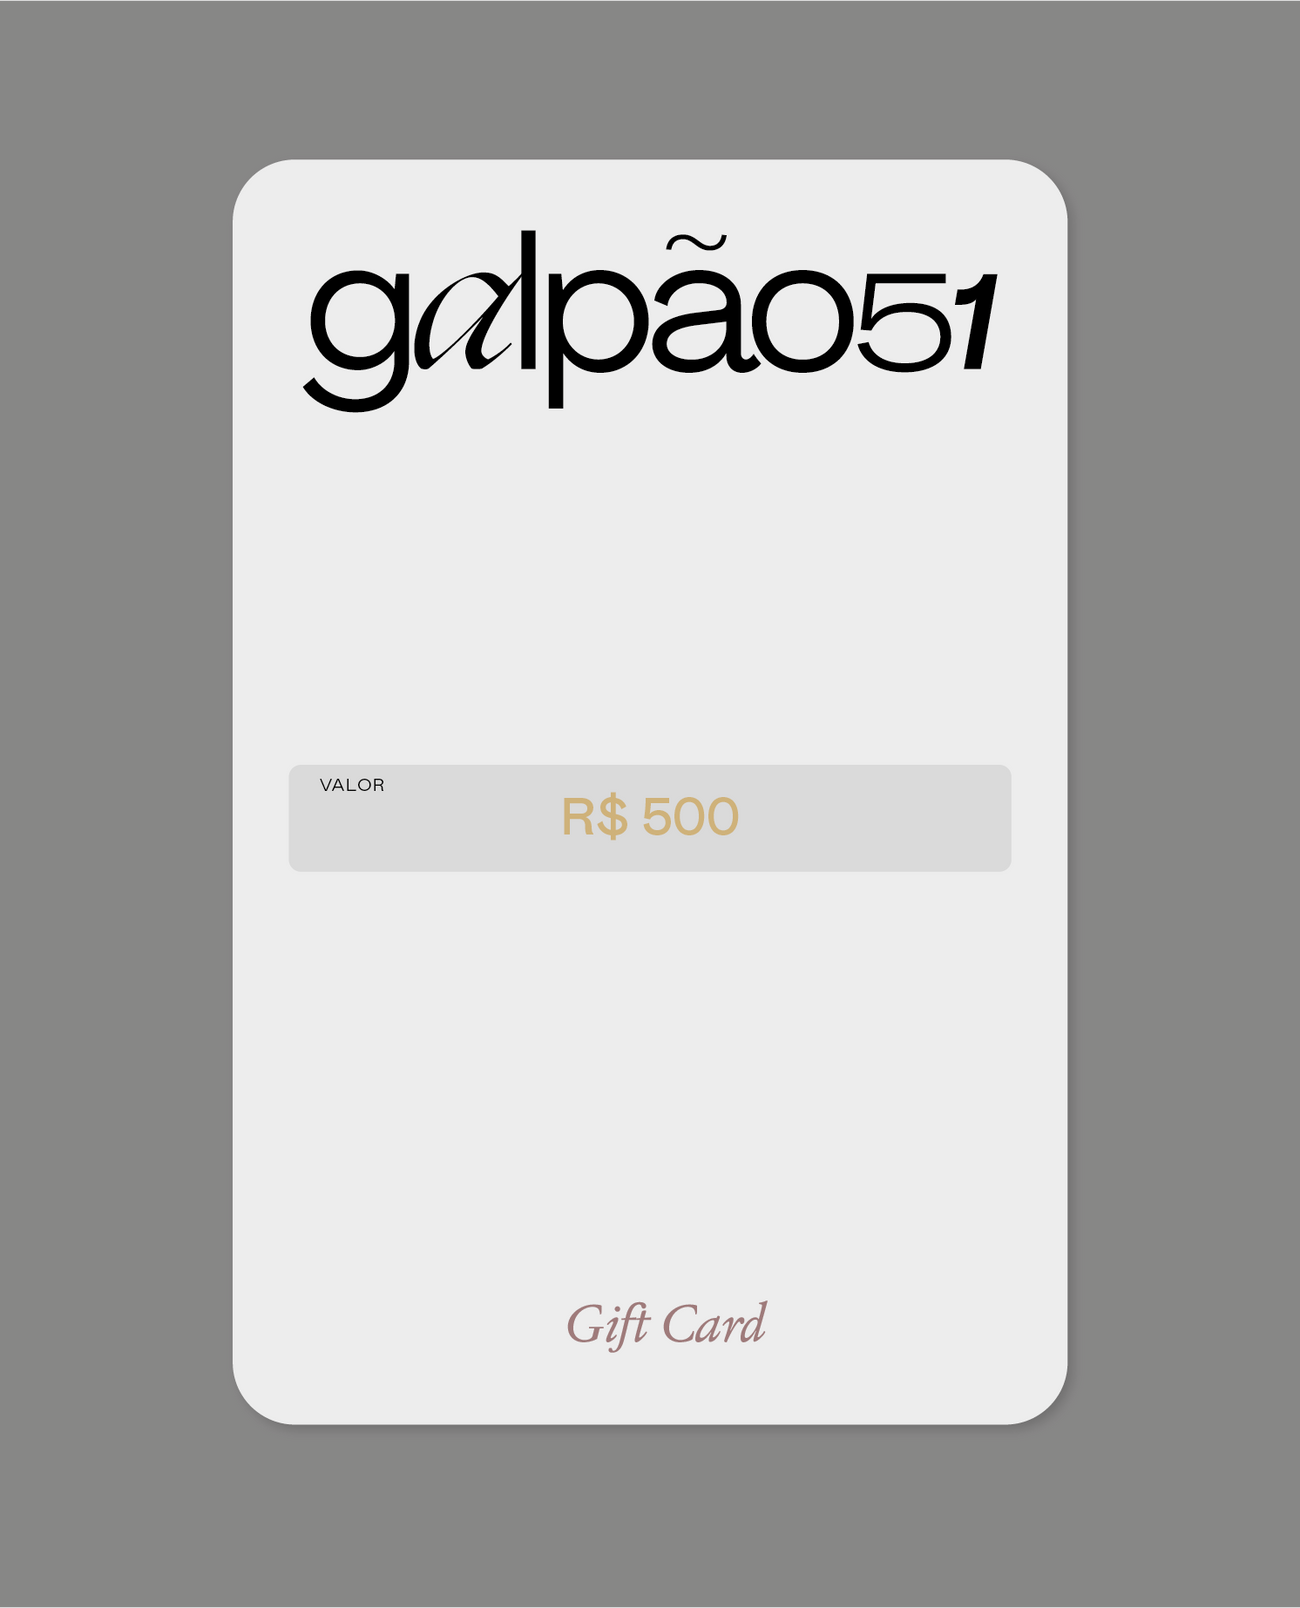 Galpão 51 Gift Card